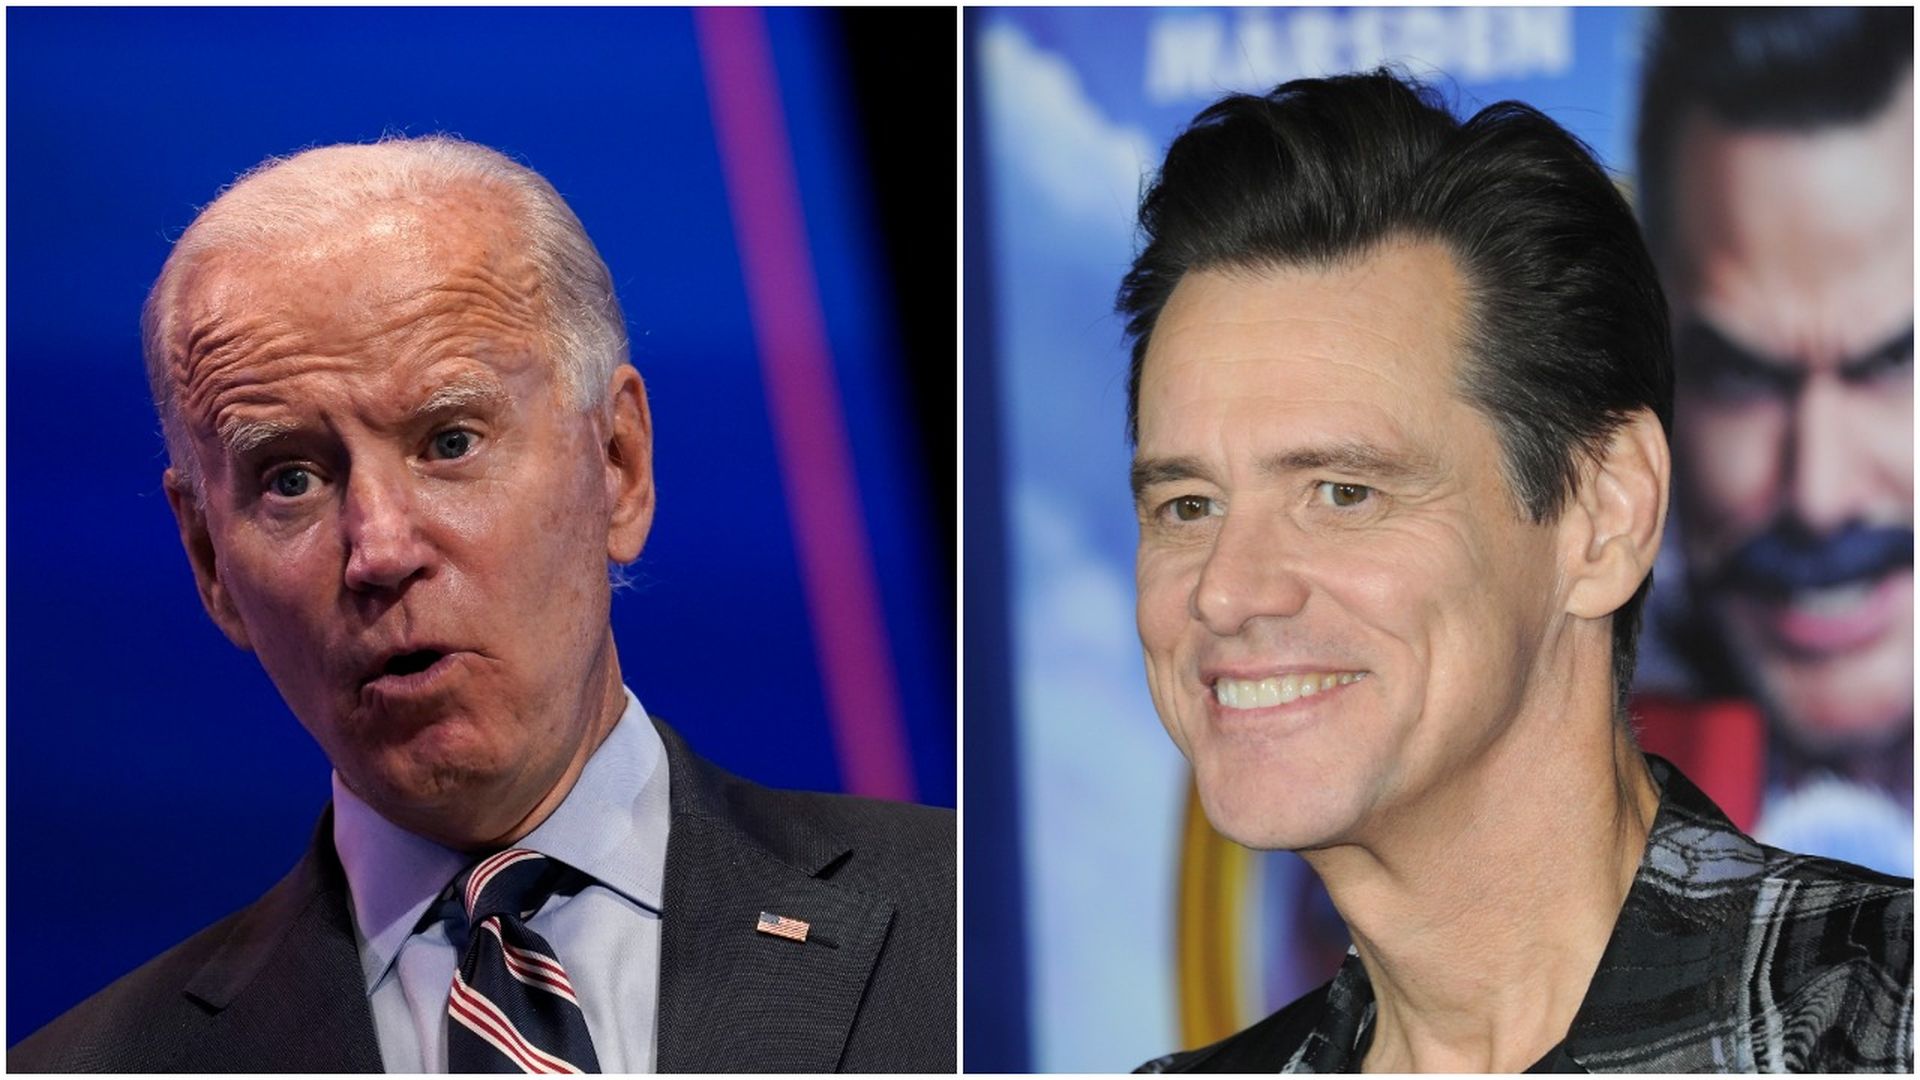 Combination images of Joe Biden and Jim Carrey